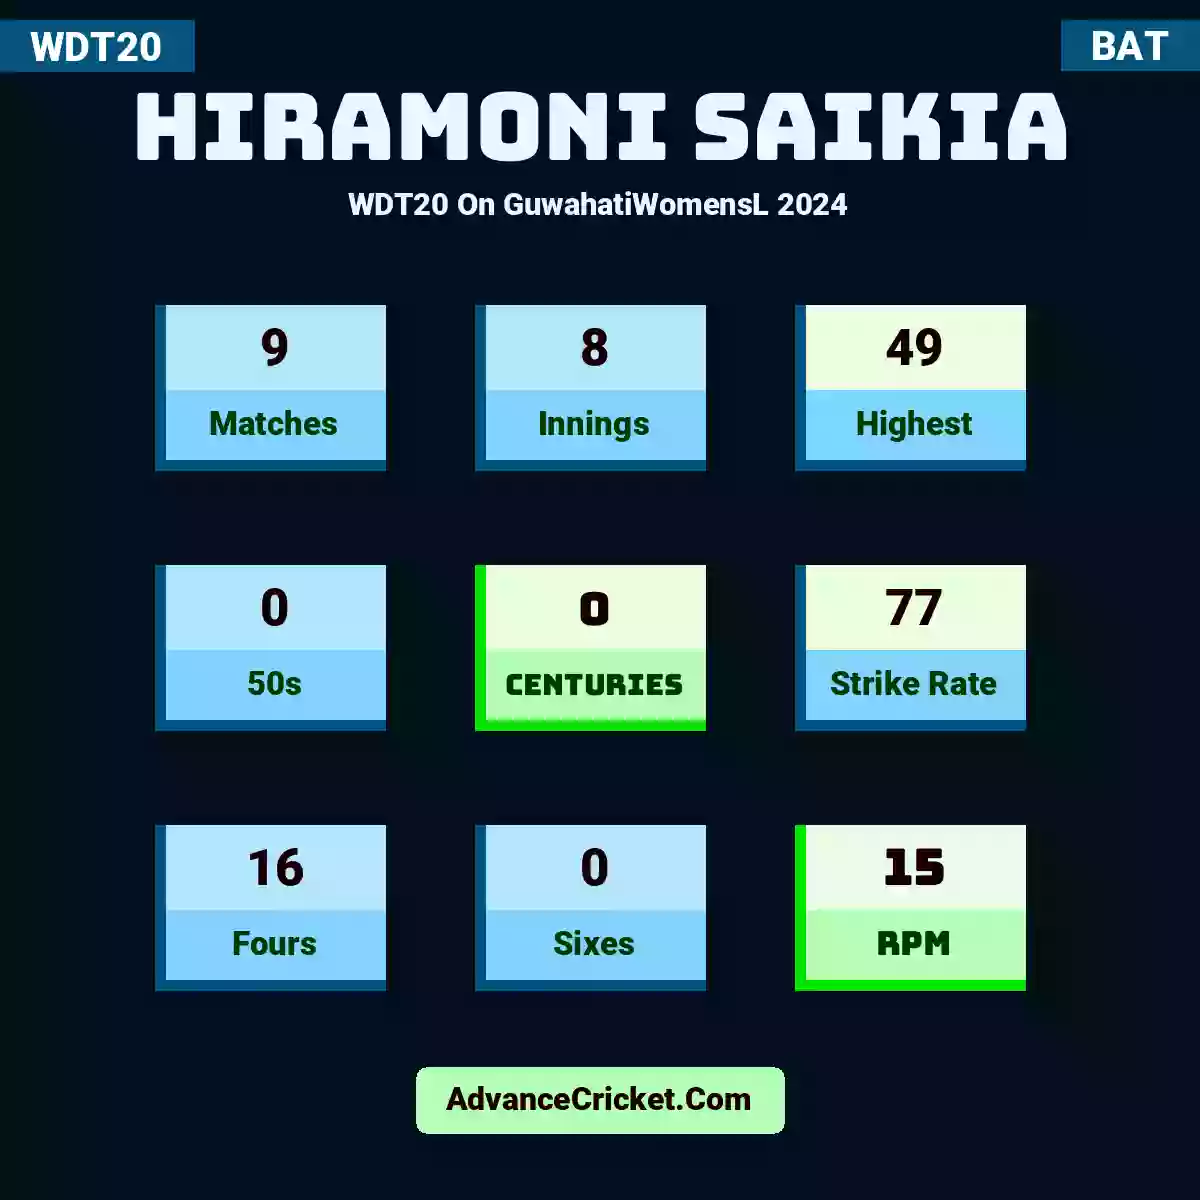 Hiramoni Saikia WDT20  On GuwahatiWomensL 2024, Hiramoni Saikia played 9 matches, scored 49 runs as highest, 0 half-centuries, and 0 centuries, with a strike rate of 77. h.saikia hit 16 fours and 0 sixes, with an RPM of 15.